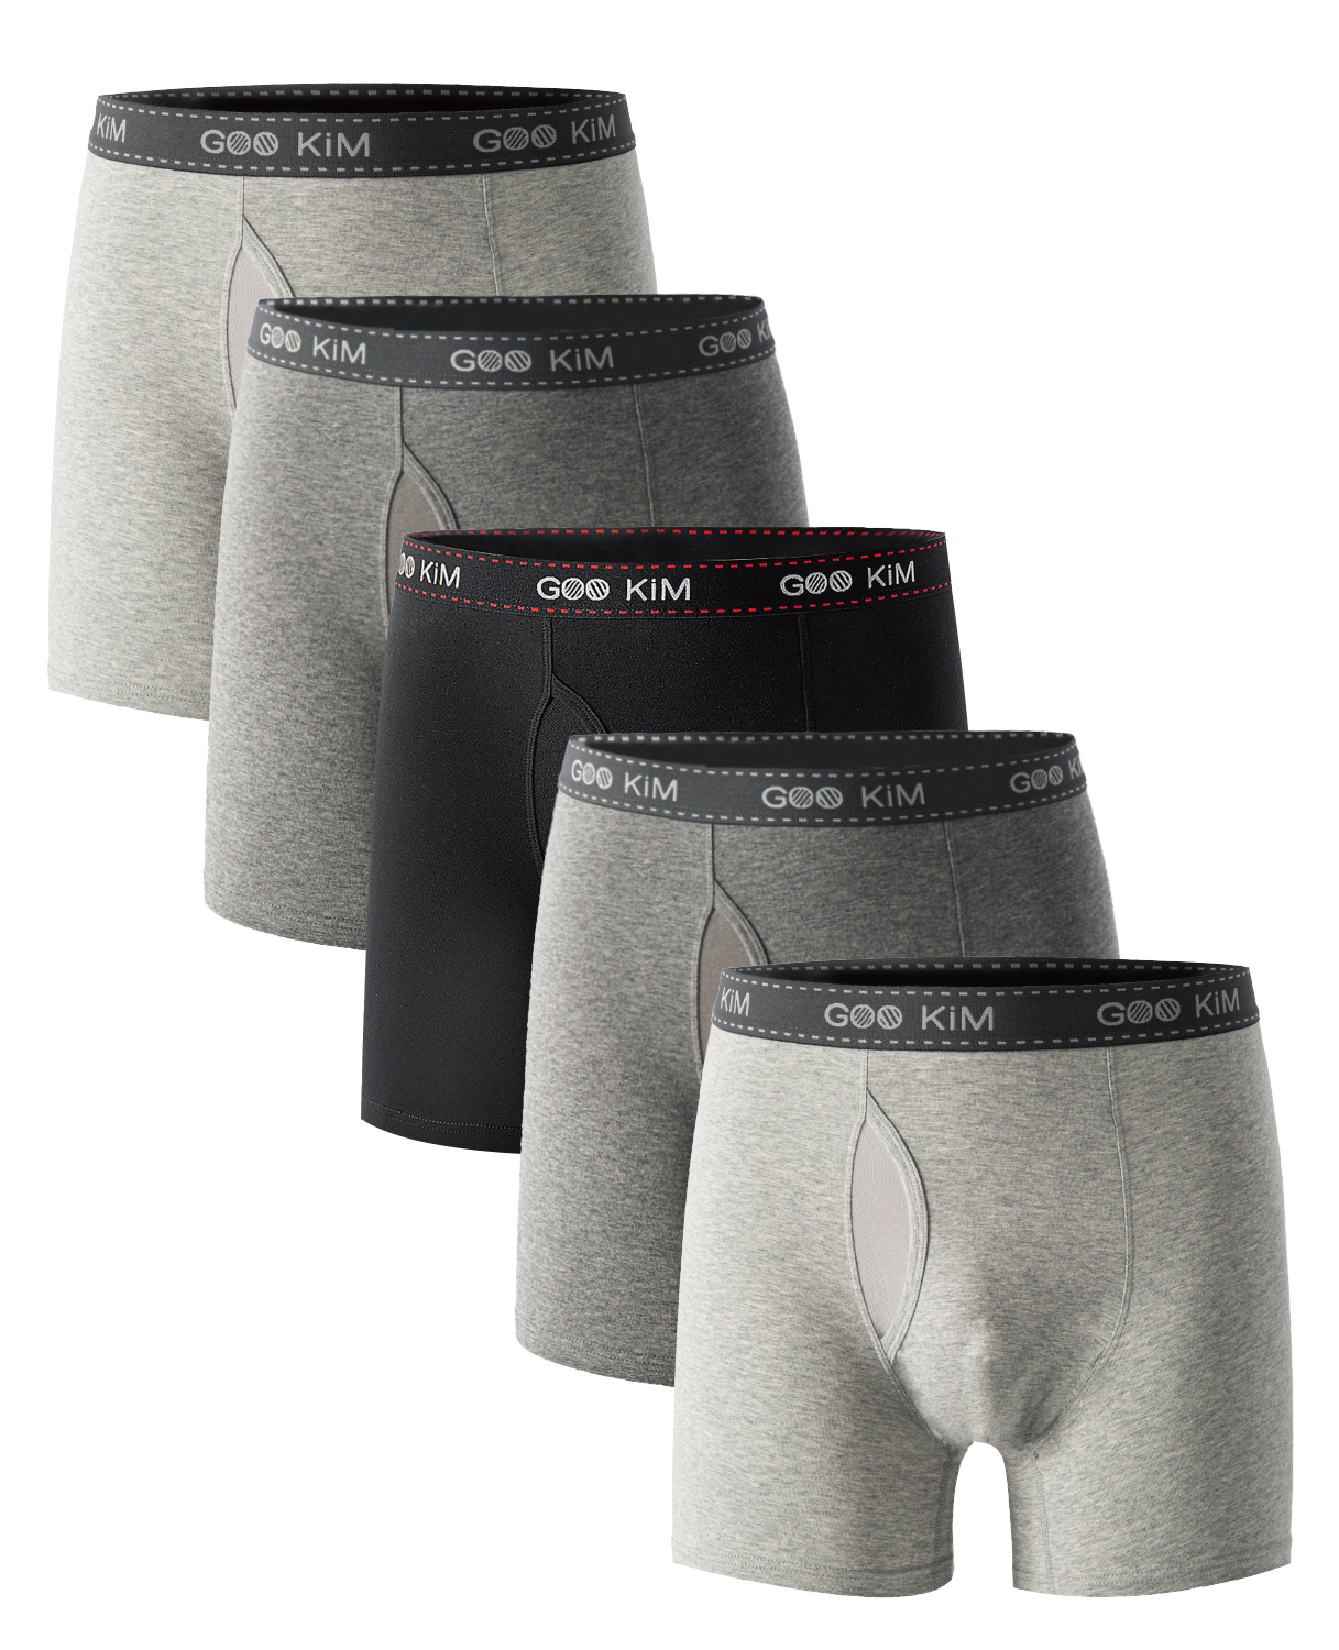 FixtureDisplays 5PK Men's Soft Cotton Boxer Briefs Fly Front Underwear ...